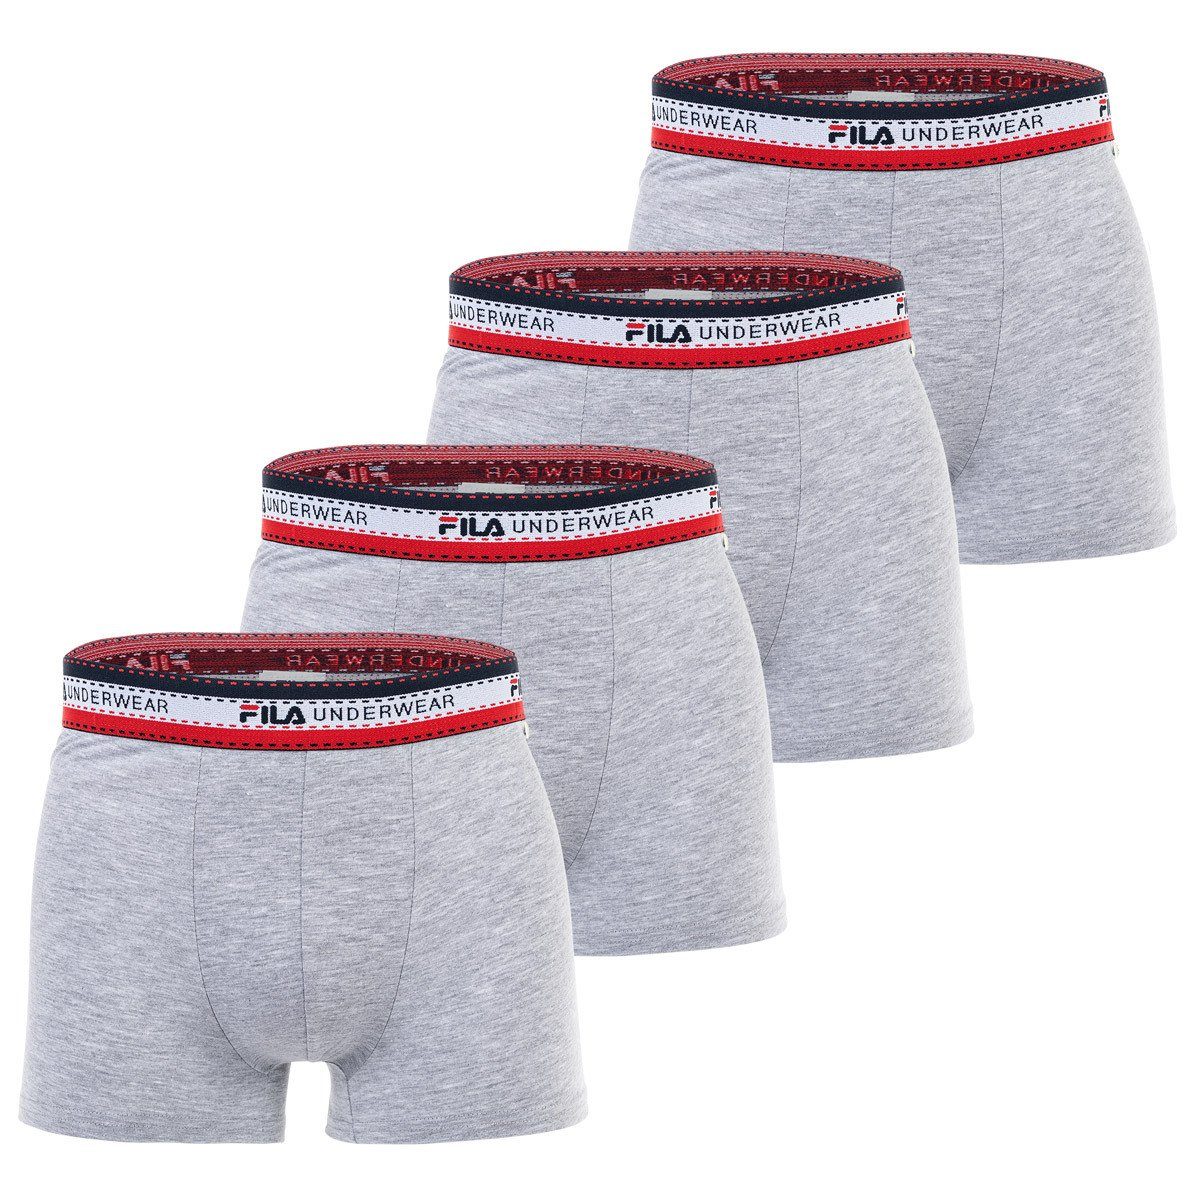 Fila Boxer Herren Boxer Shorts, 4er Pack - Logobund, Cotton Grau